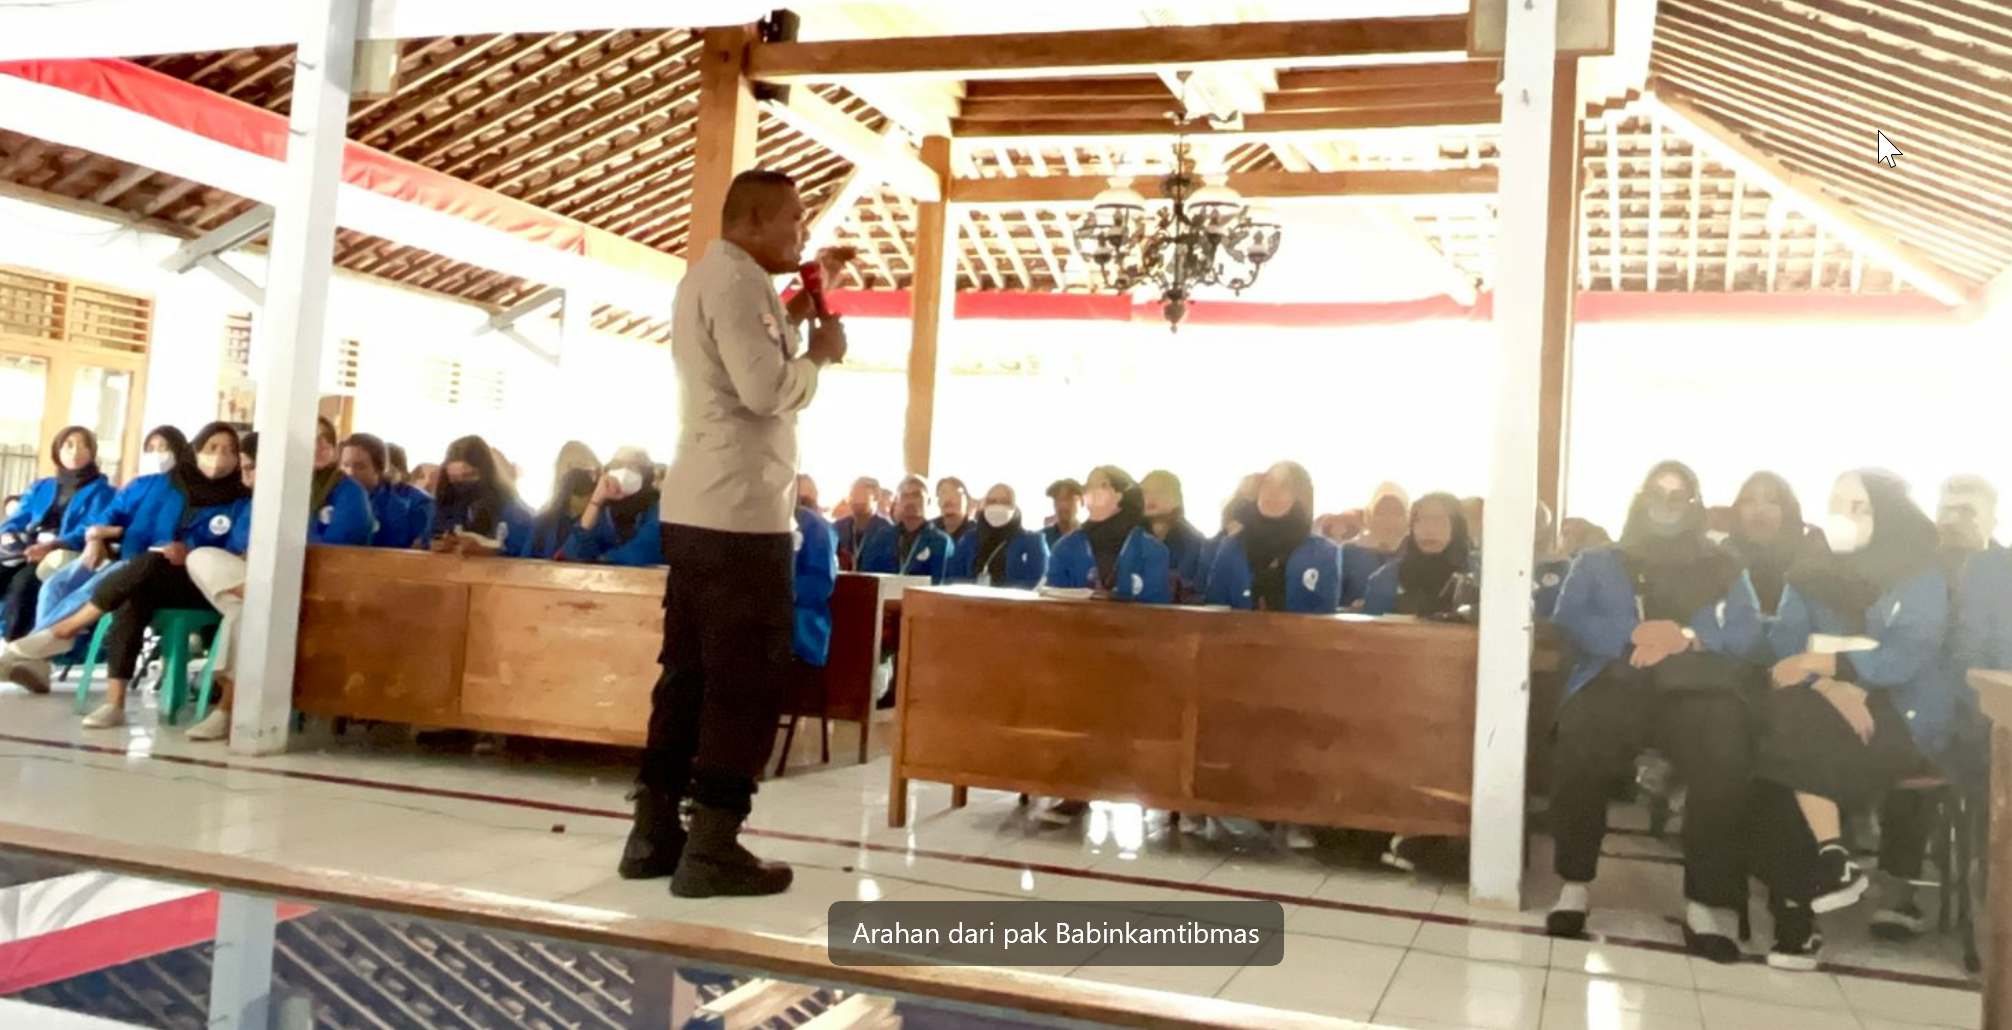 Arahan dari babinkamtibmas-KKN-UMBY mercu Buana Yogyakarta 2023-Pesan harian untuk Mahasiswa KKN selama 30 hari di Semanu Gunungkidul